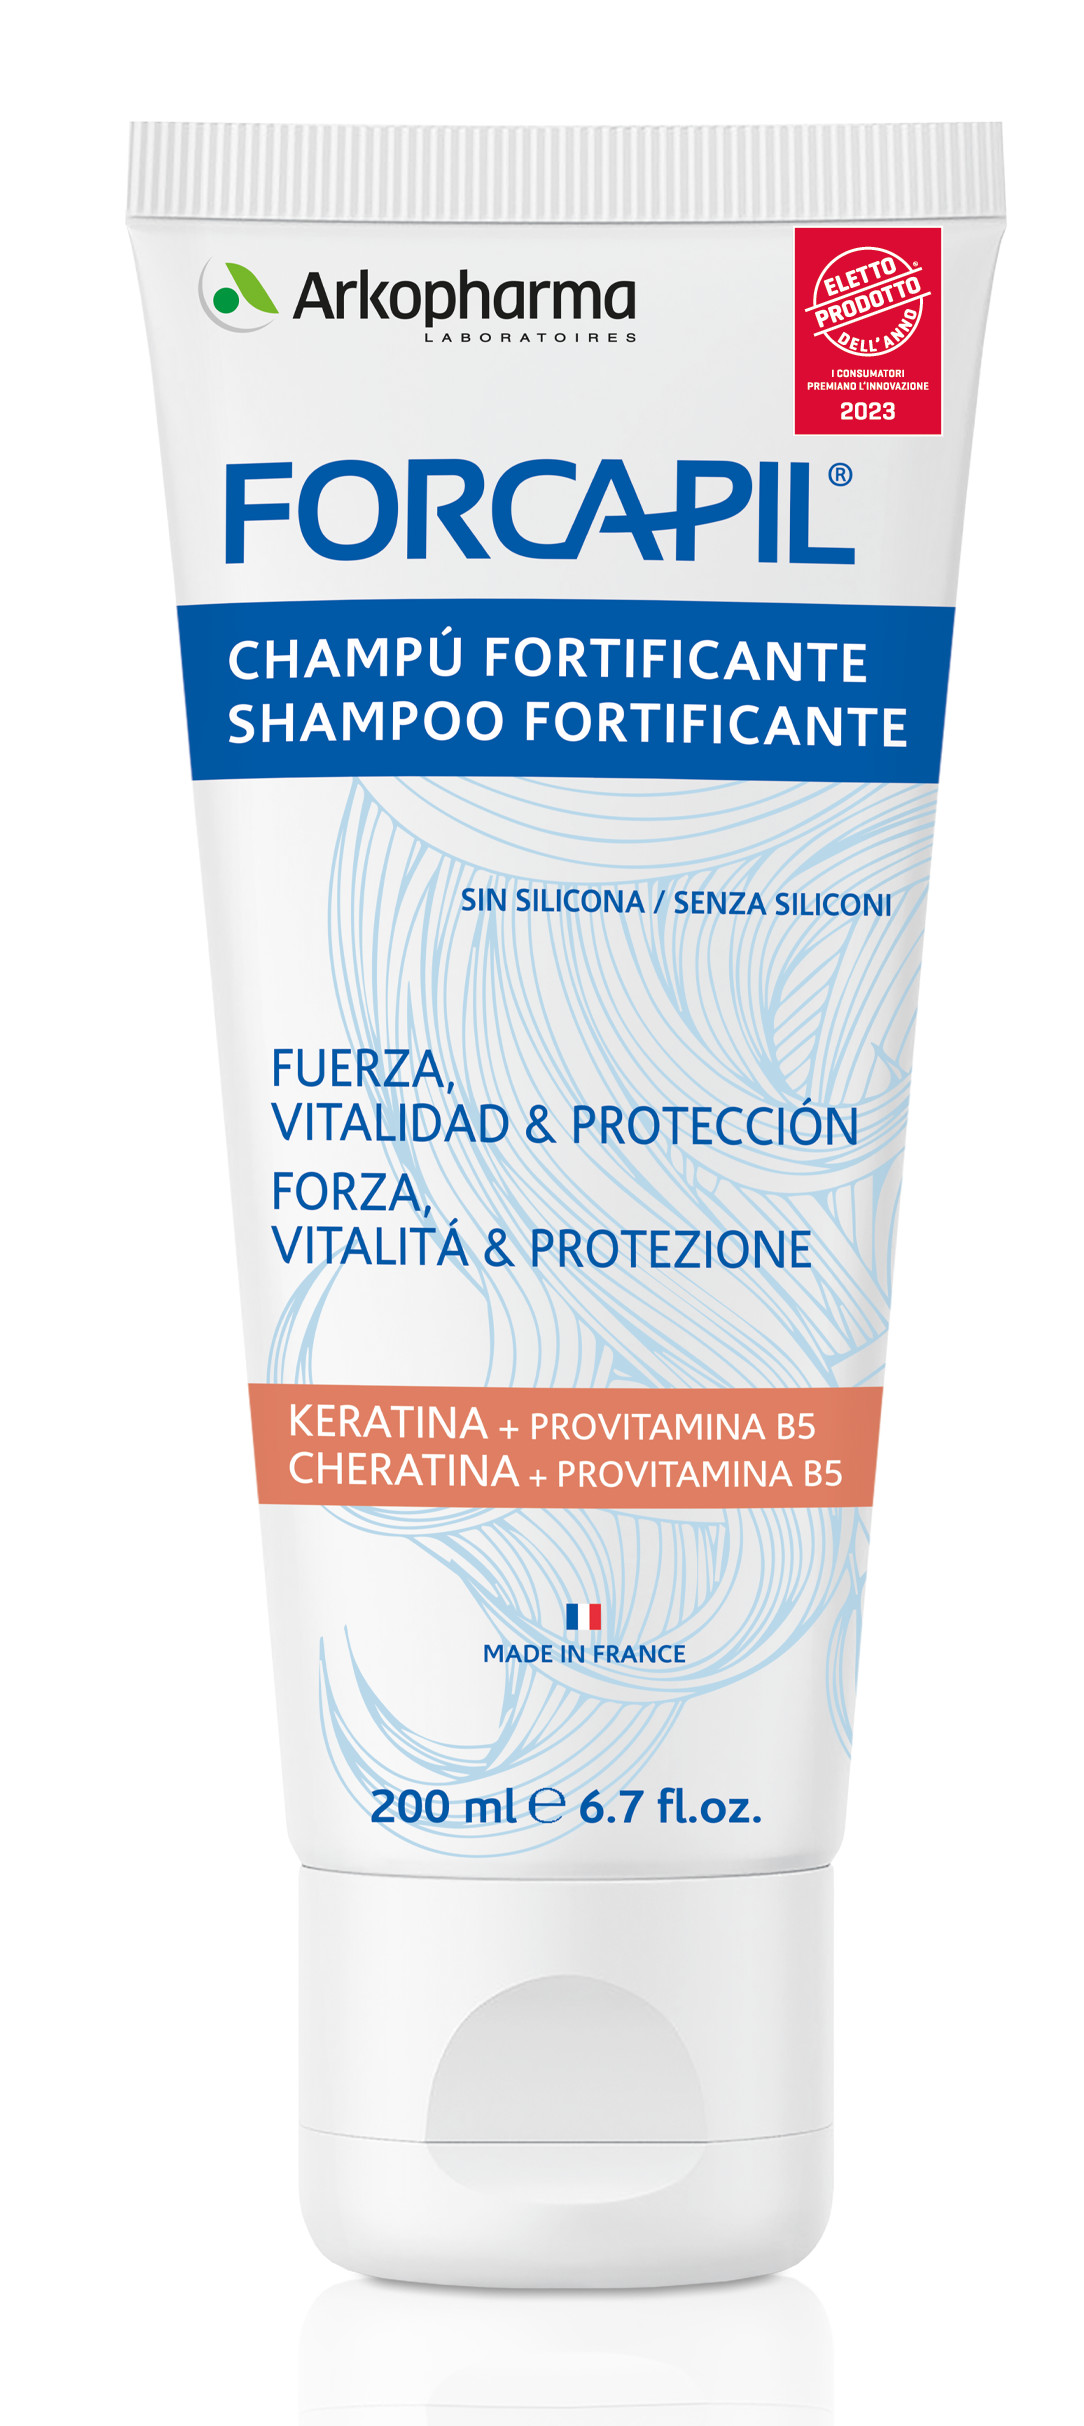 981441936 - Arkopharma Forcapil Shampoo Fortificante 200ml - 4737534_2.jpg